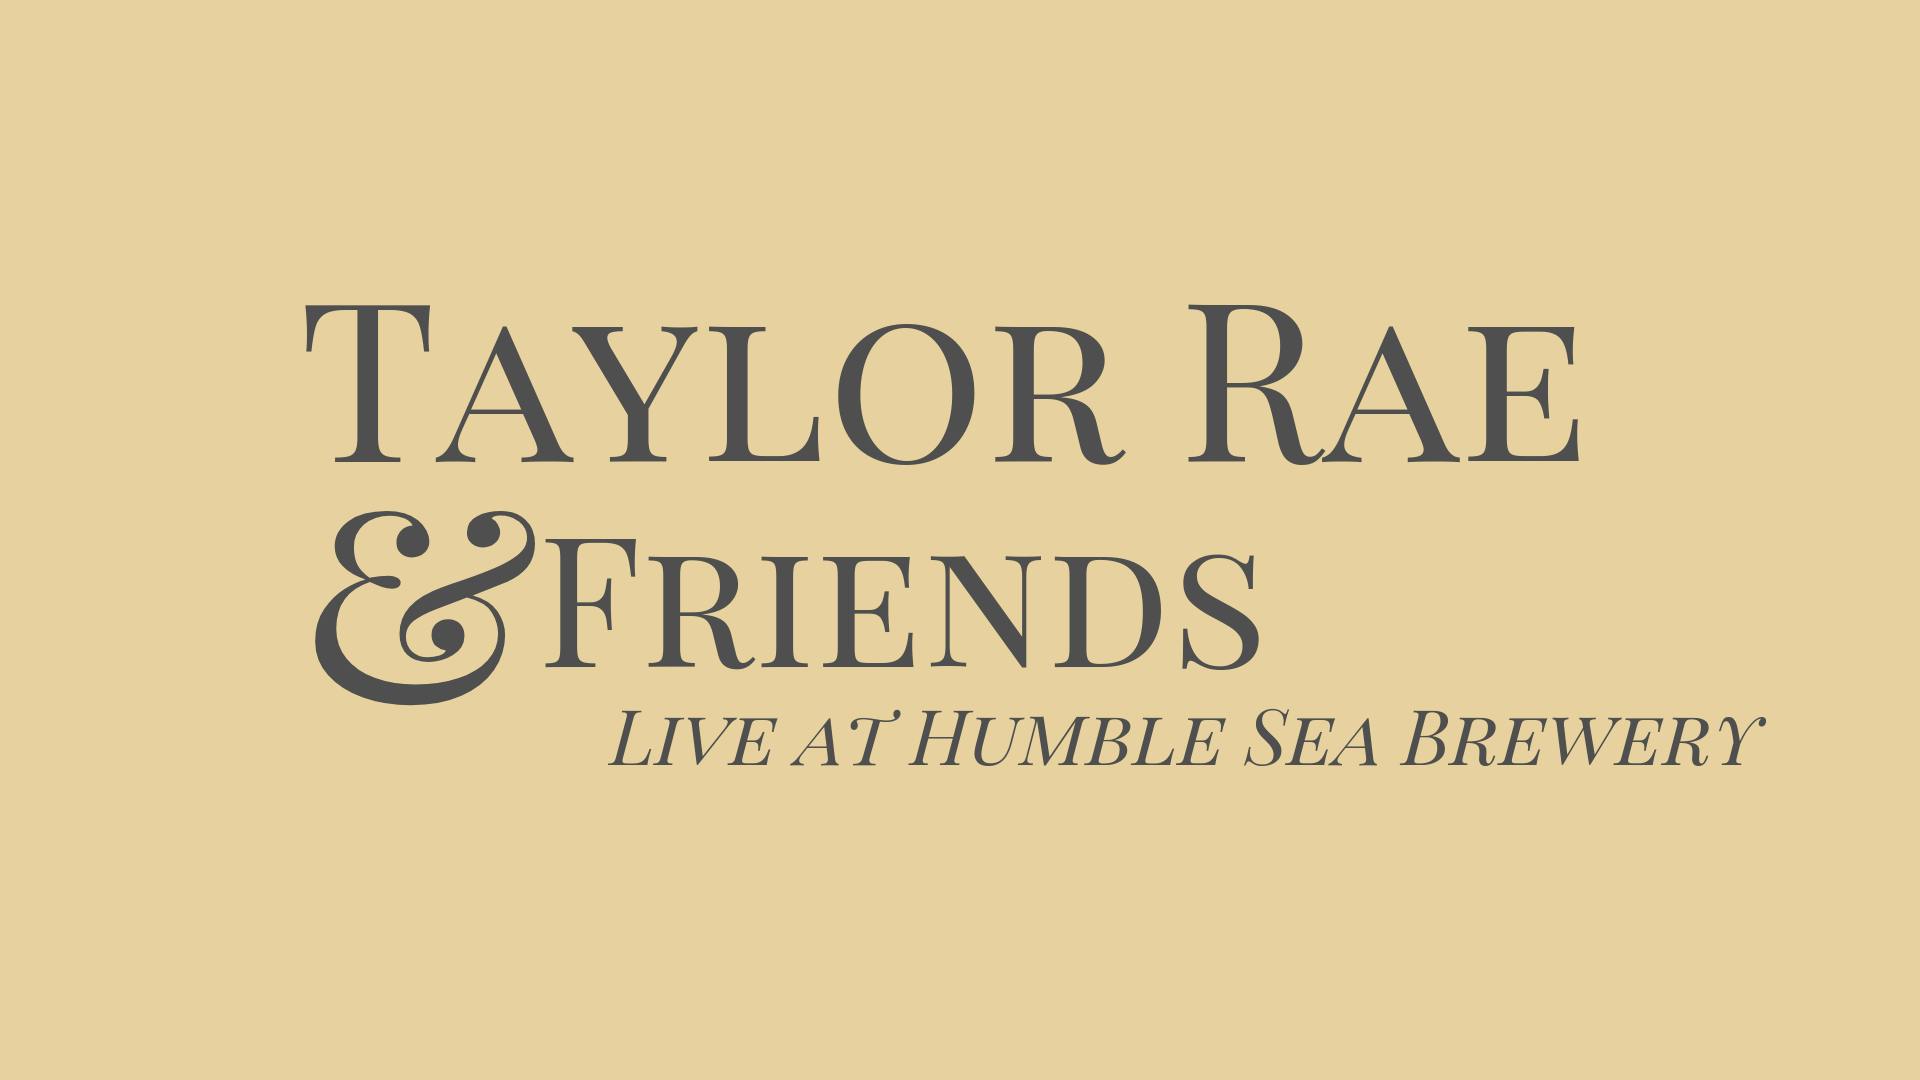 Taylor Rae & Friends